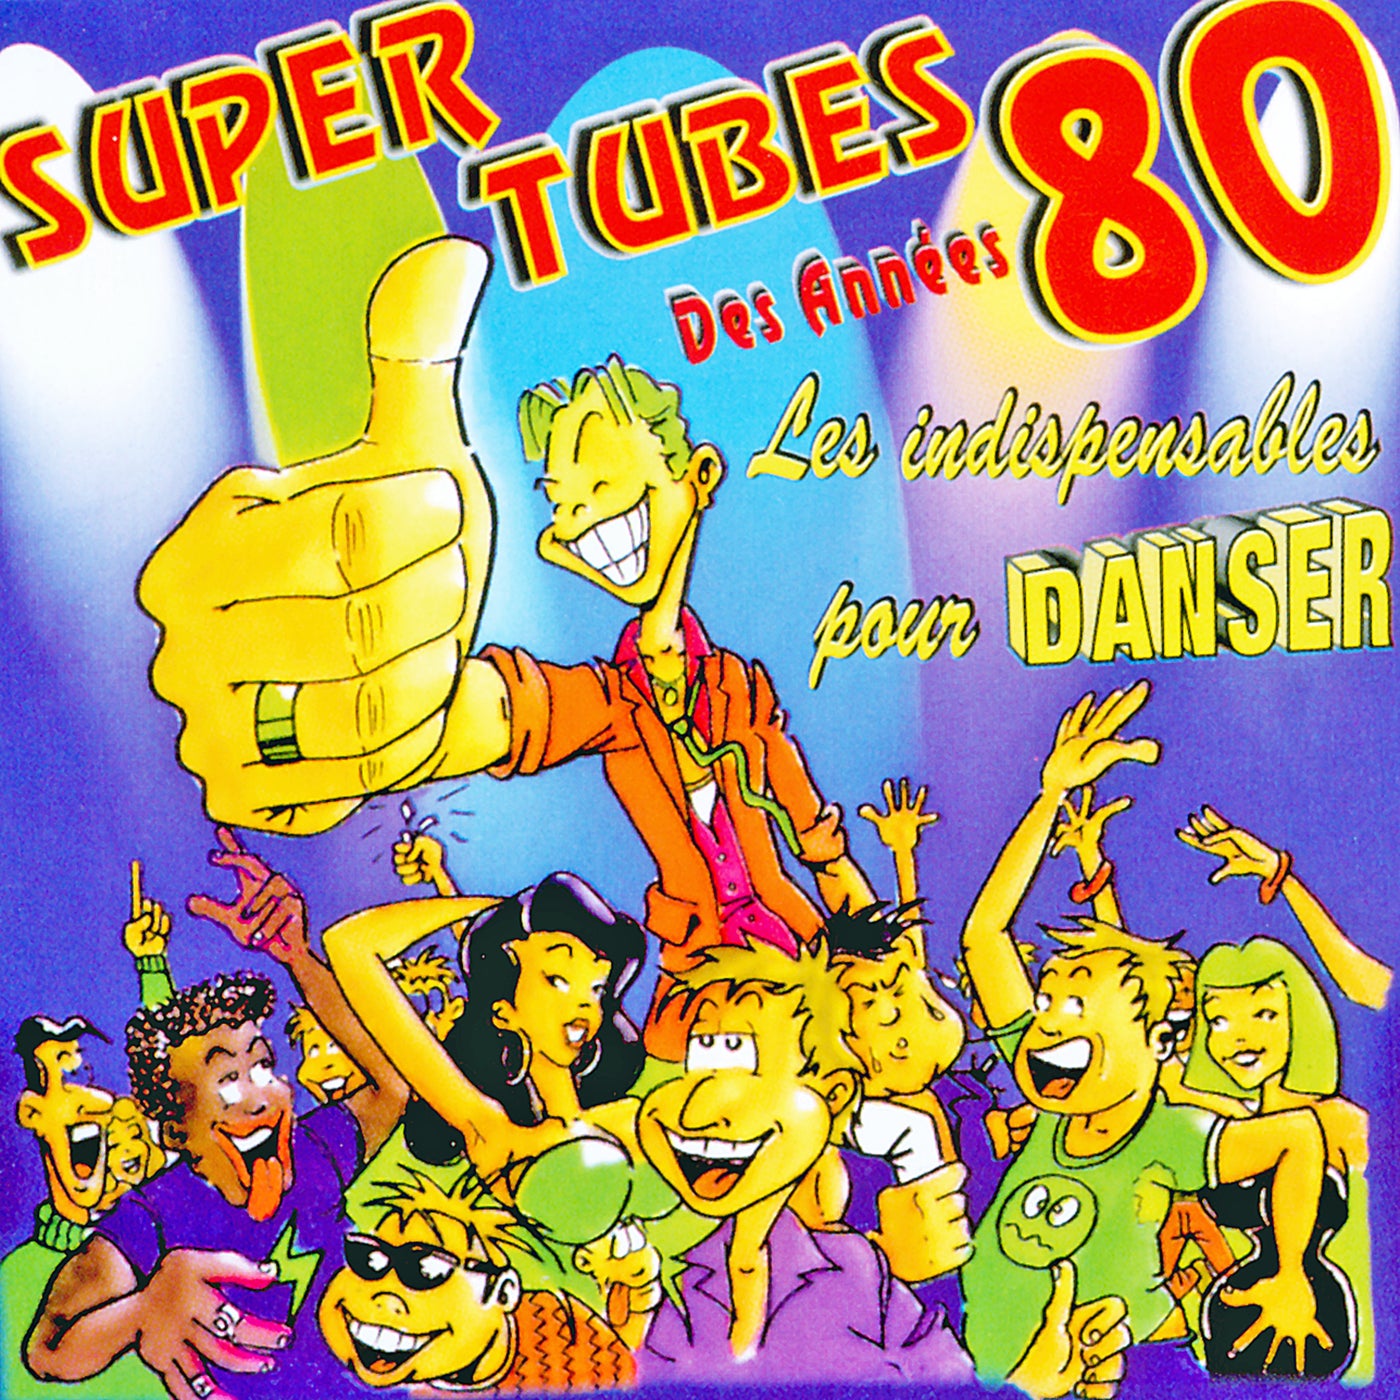 Karaoké années 80 Vol. 1 by Digital Orchestra on Beatsource